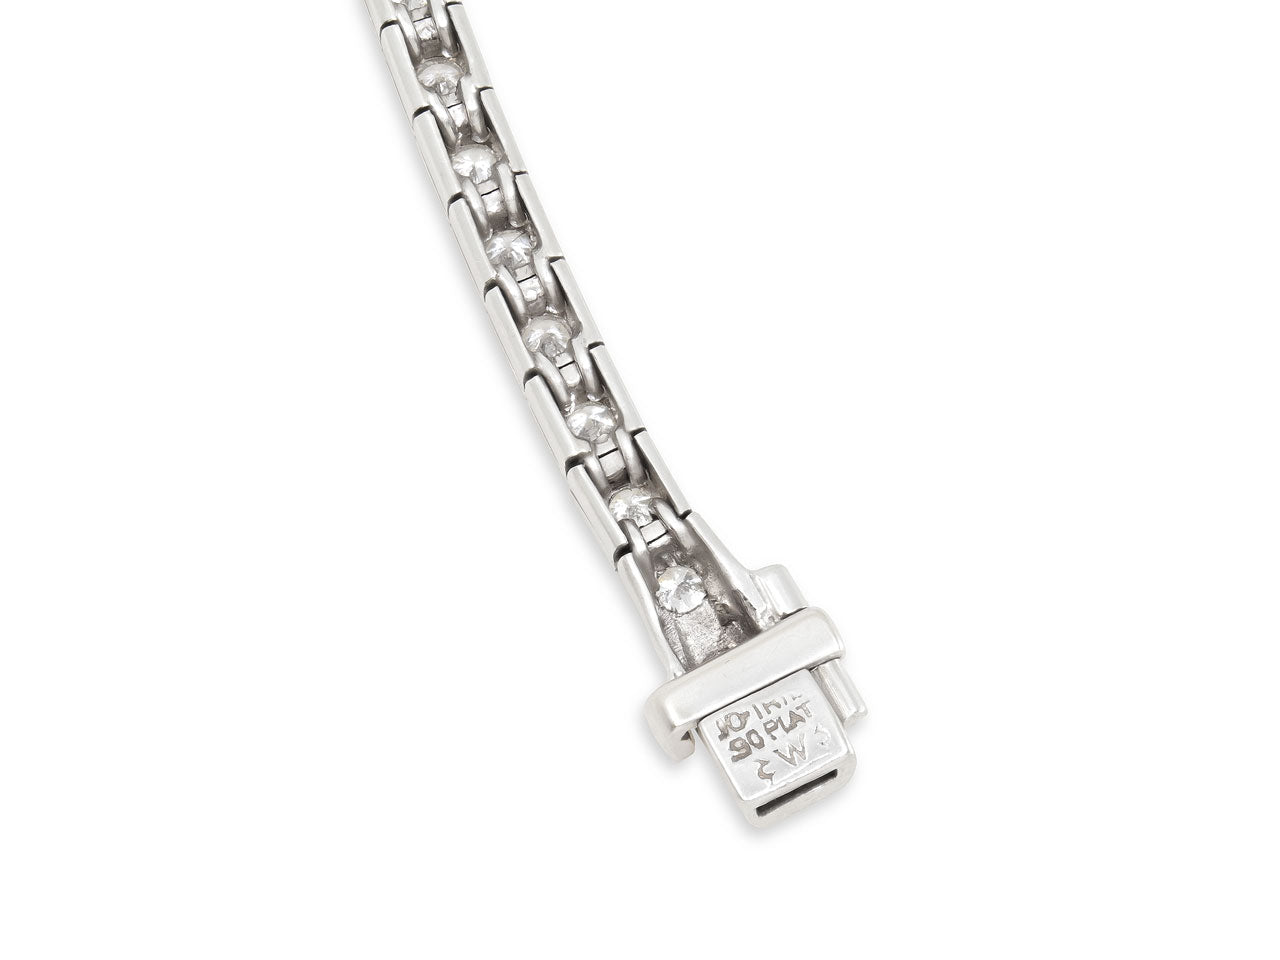 Waslikoff Art Deco Diamond Rivière Necklace in Platinum